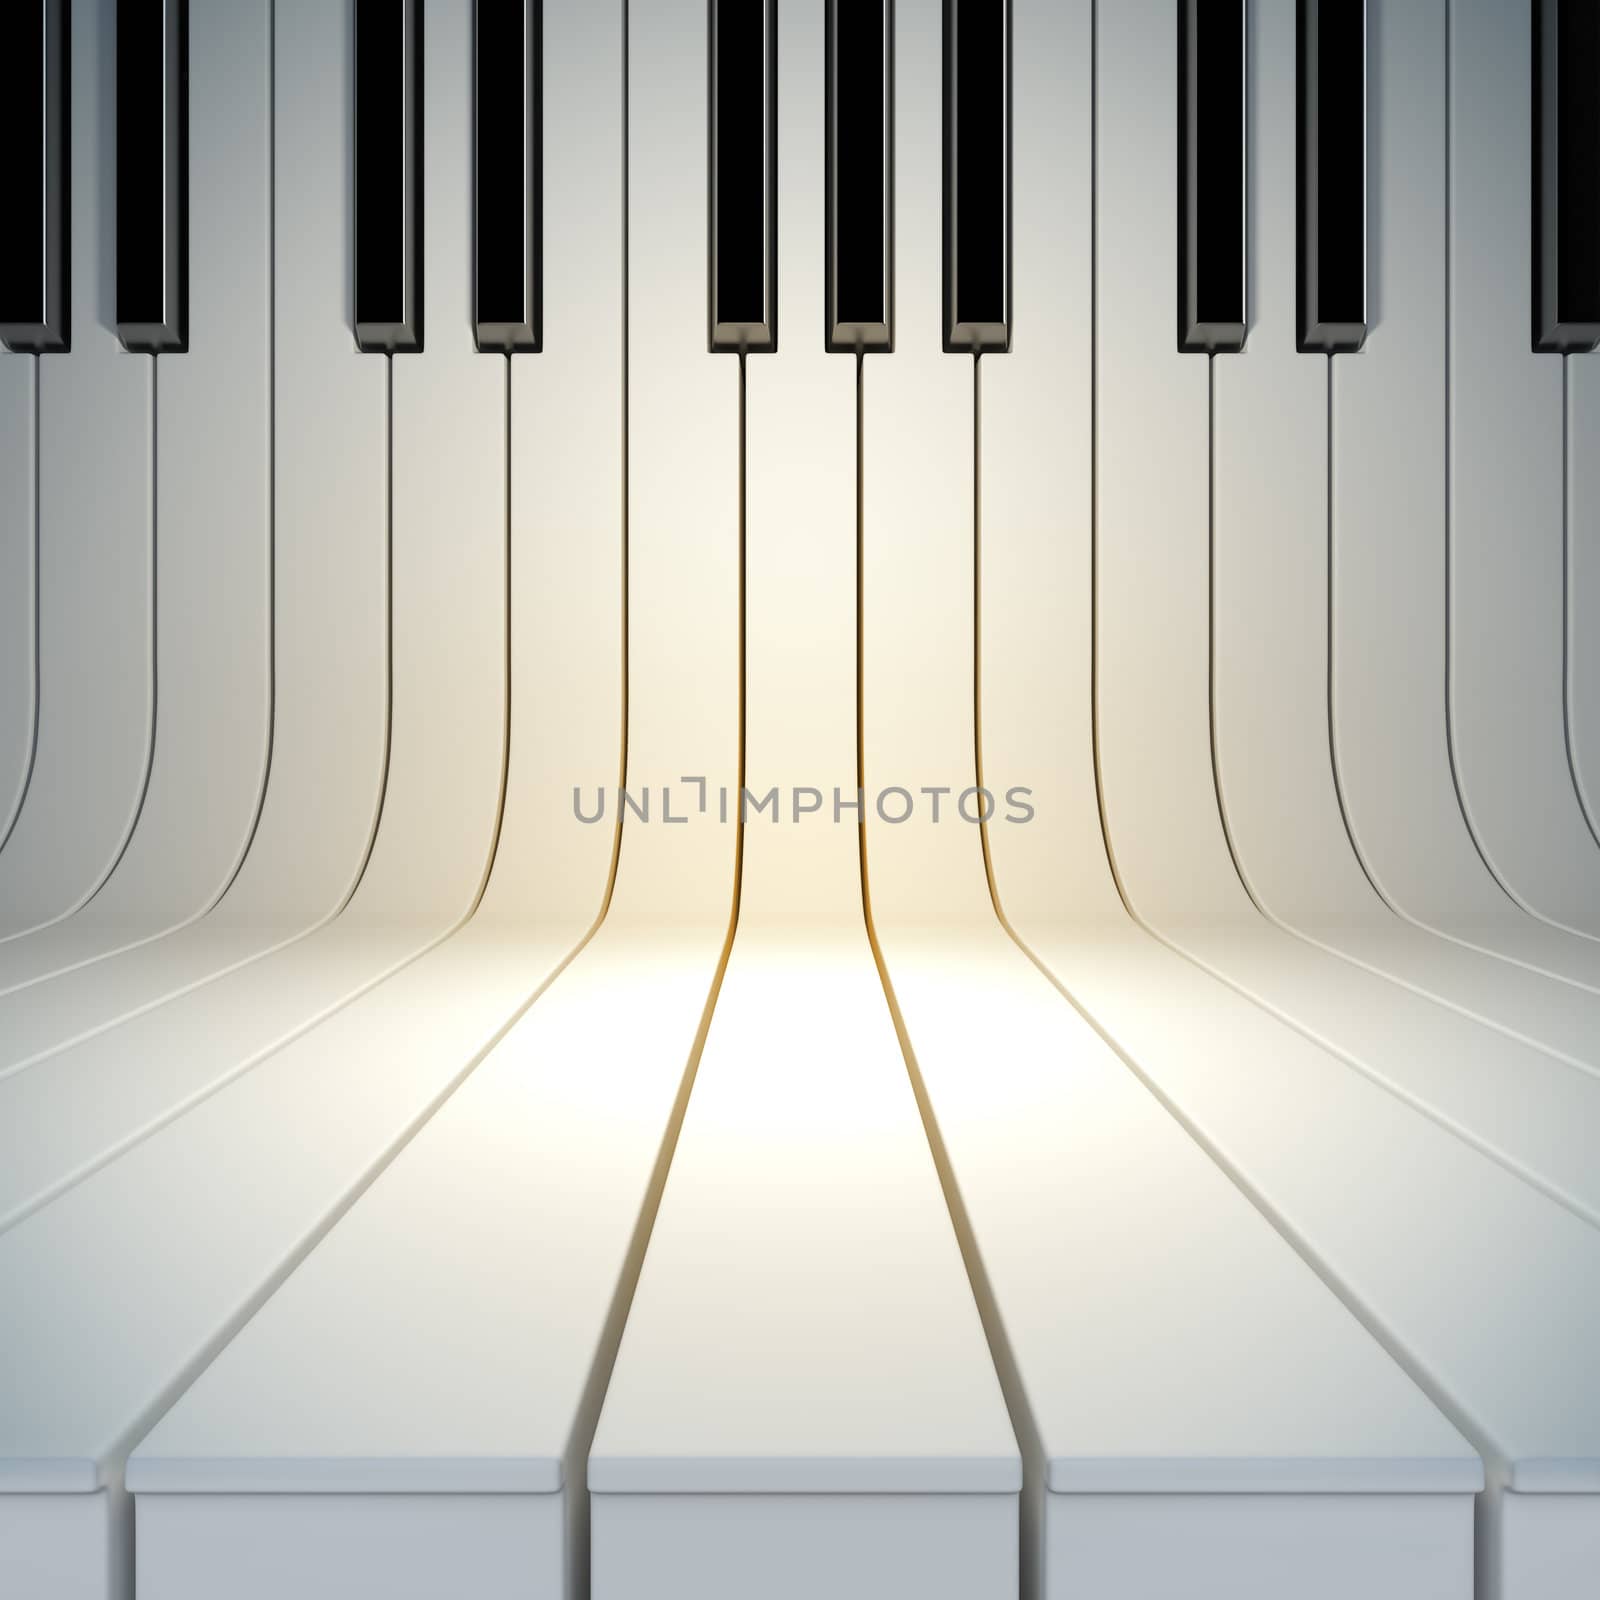 blank surface from piano keys by _nav_